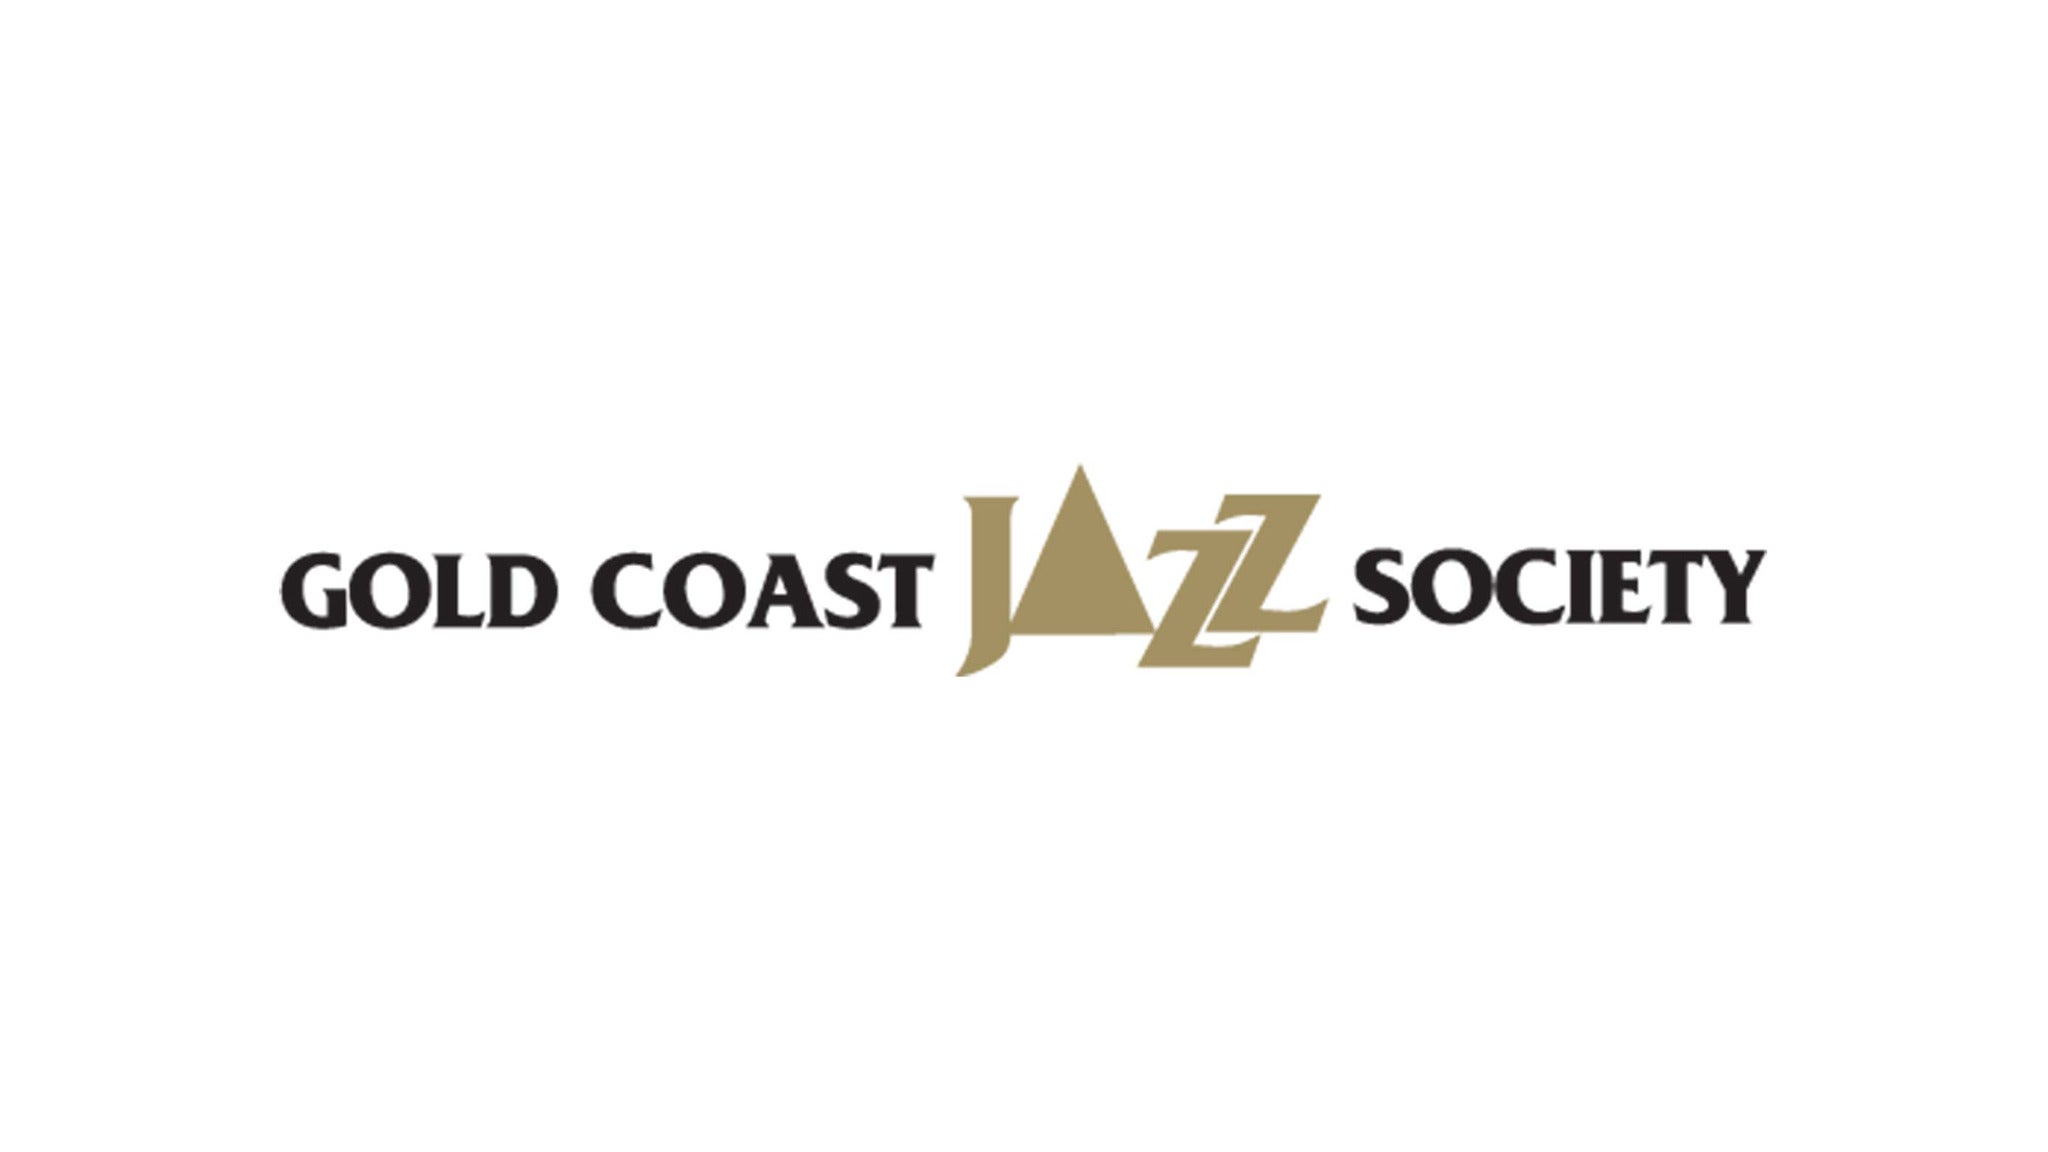 Gold Coast Jazz: Chuchito Valdes